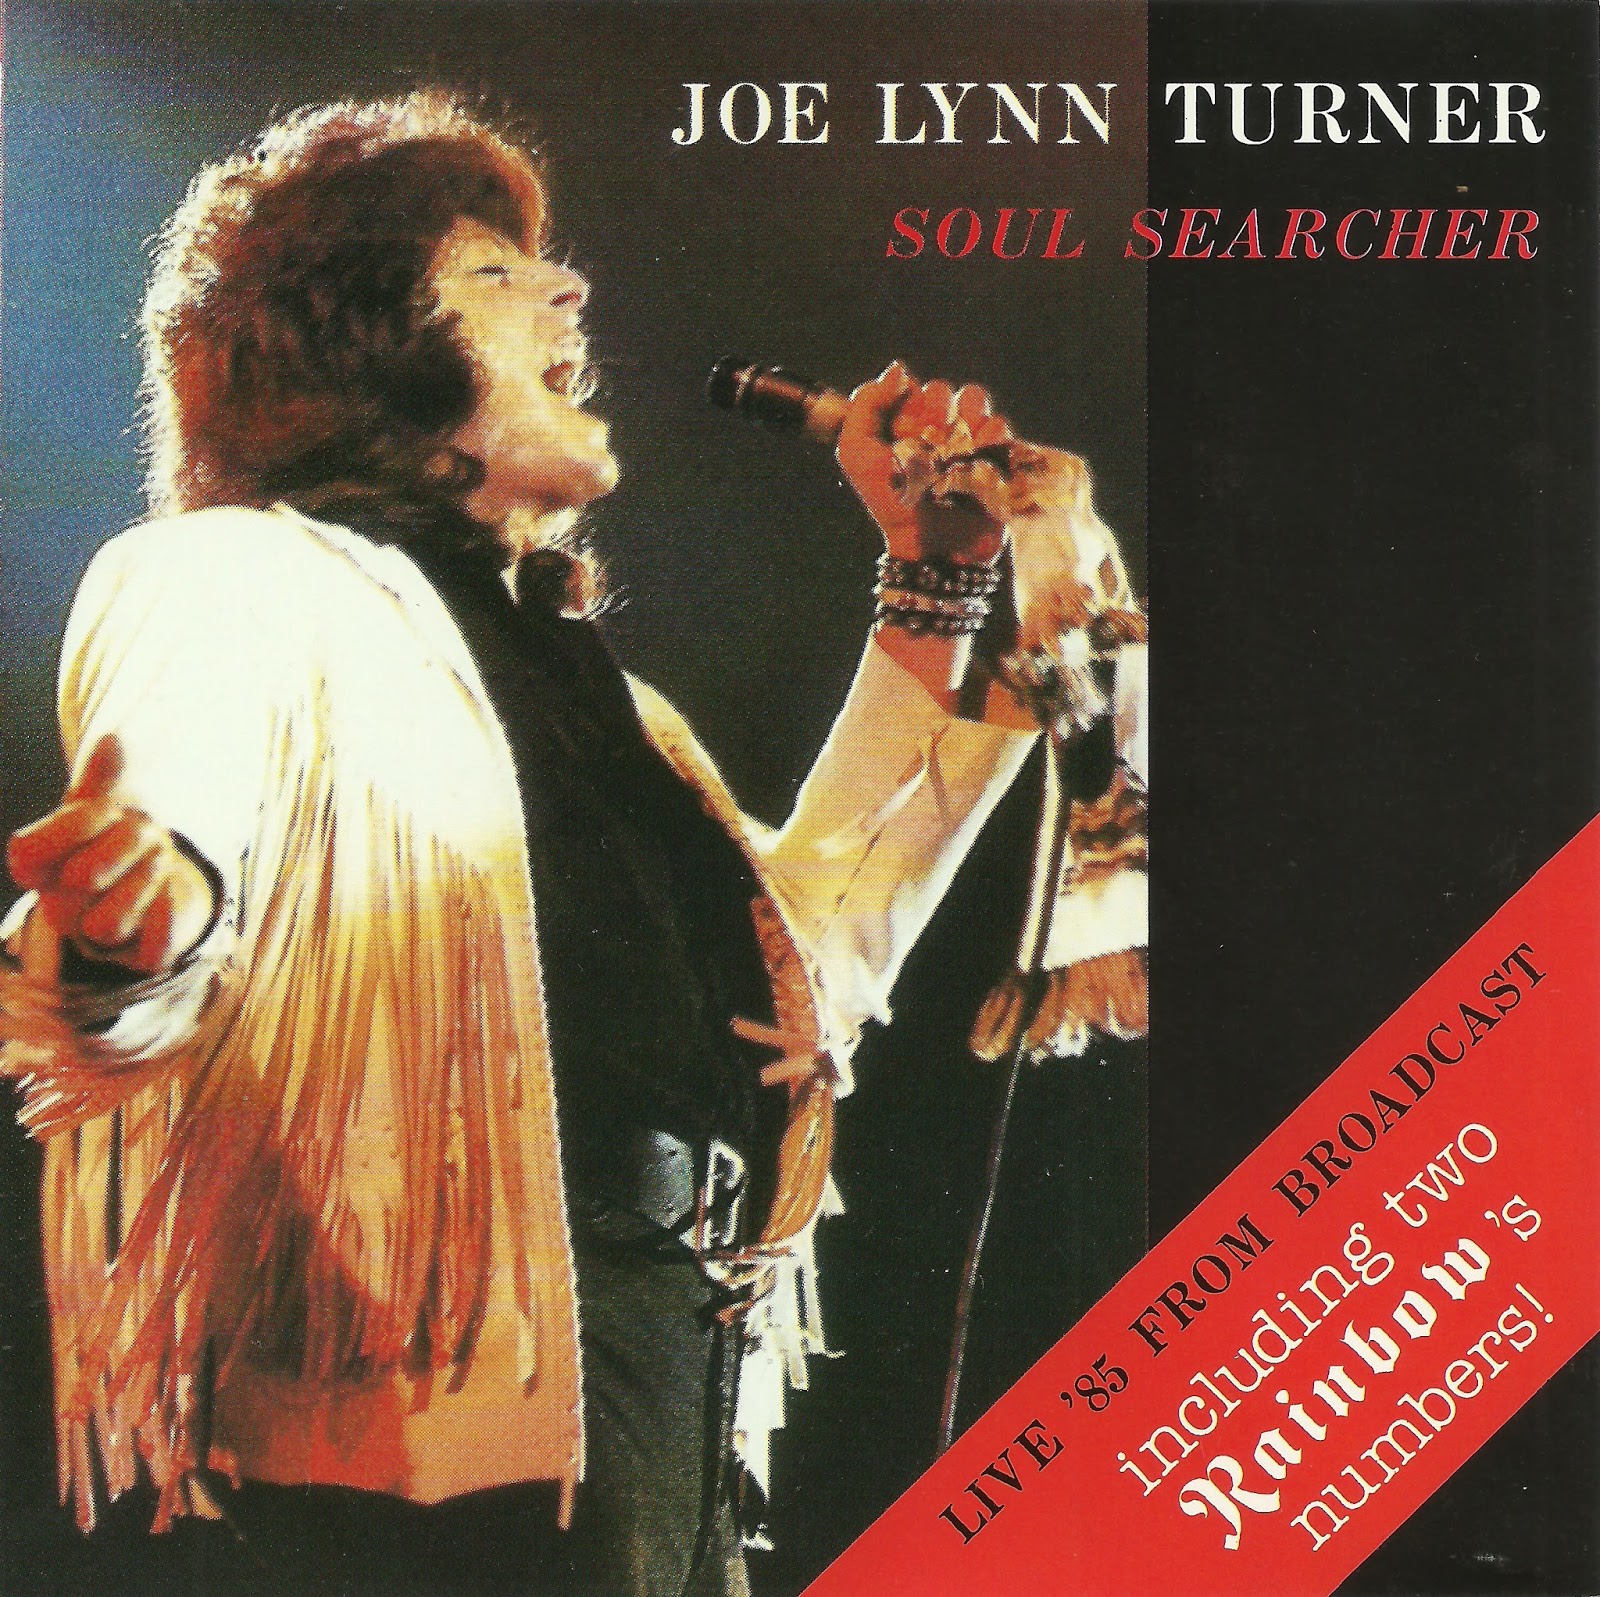 Альбомы тернера. Джо Линн тёрнер. Joe Lynn Turner 1985. Джо Линн Тернер Rainbow. Joe Lynn Turner 2022.